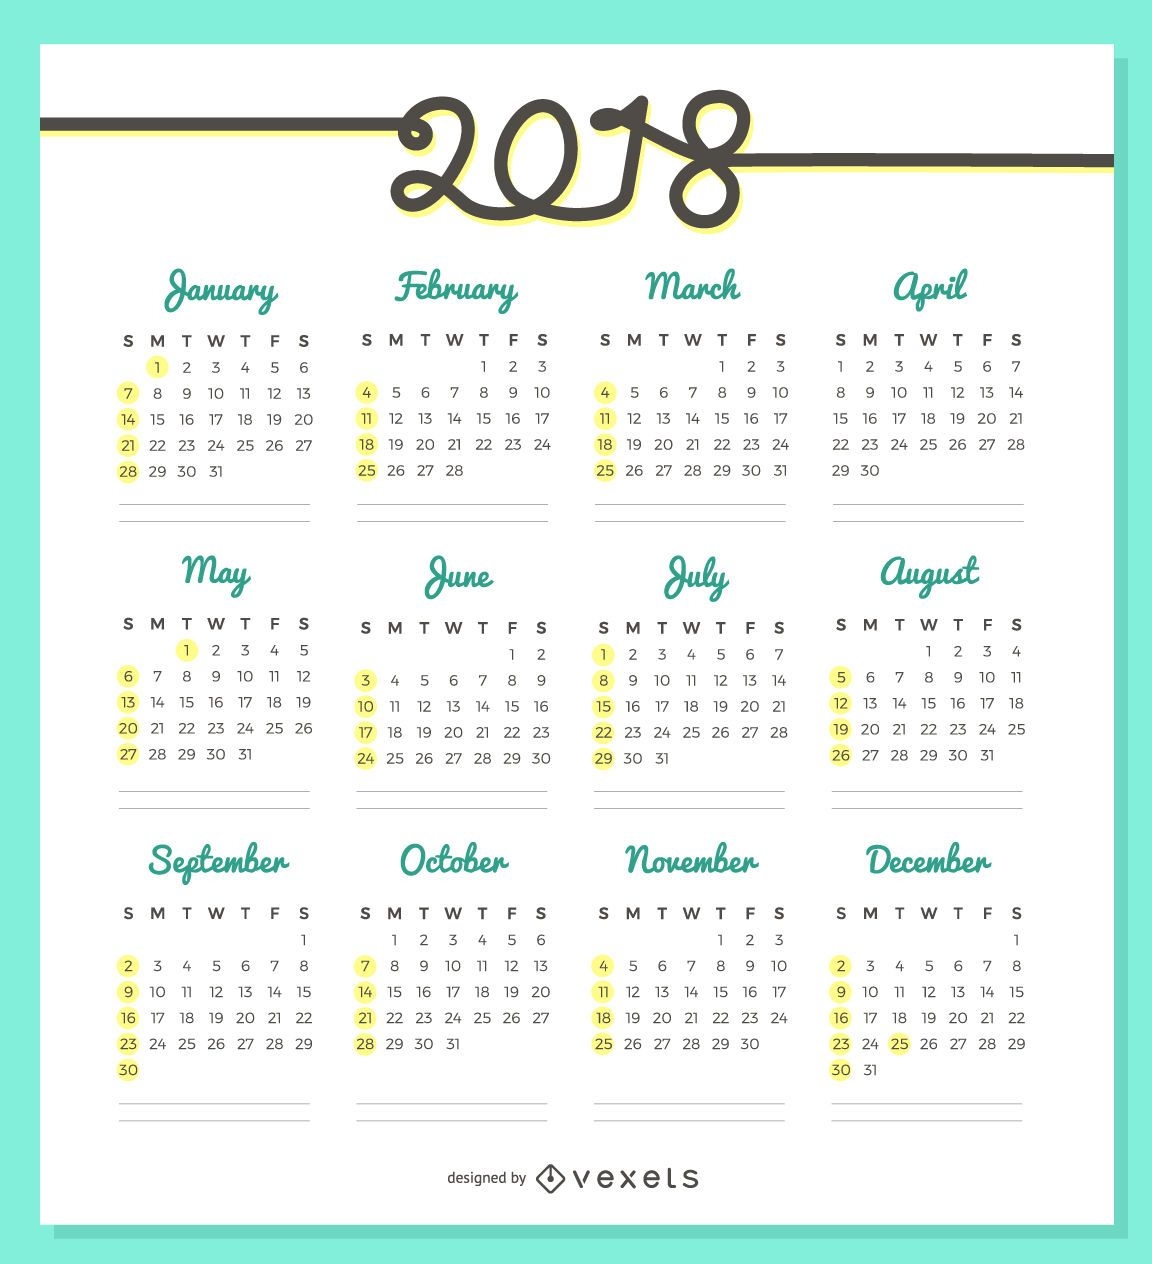 Delicate 2018 calendar design